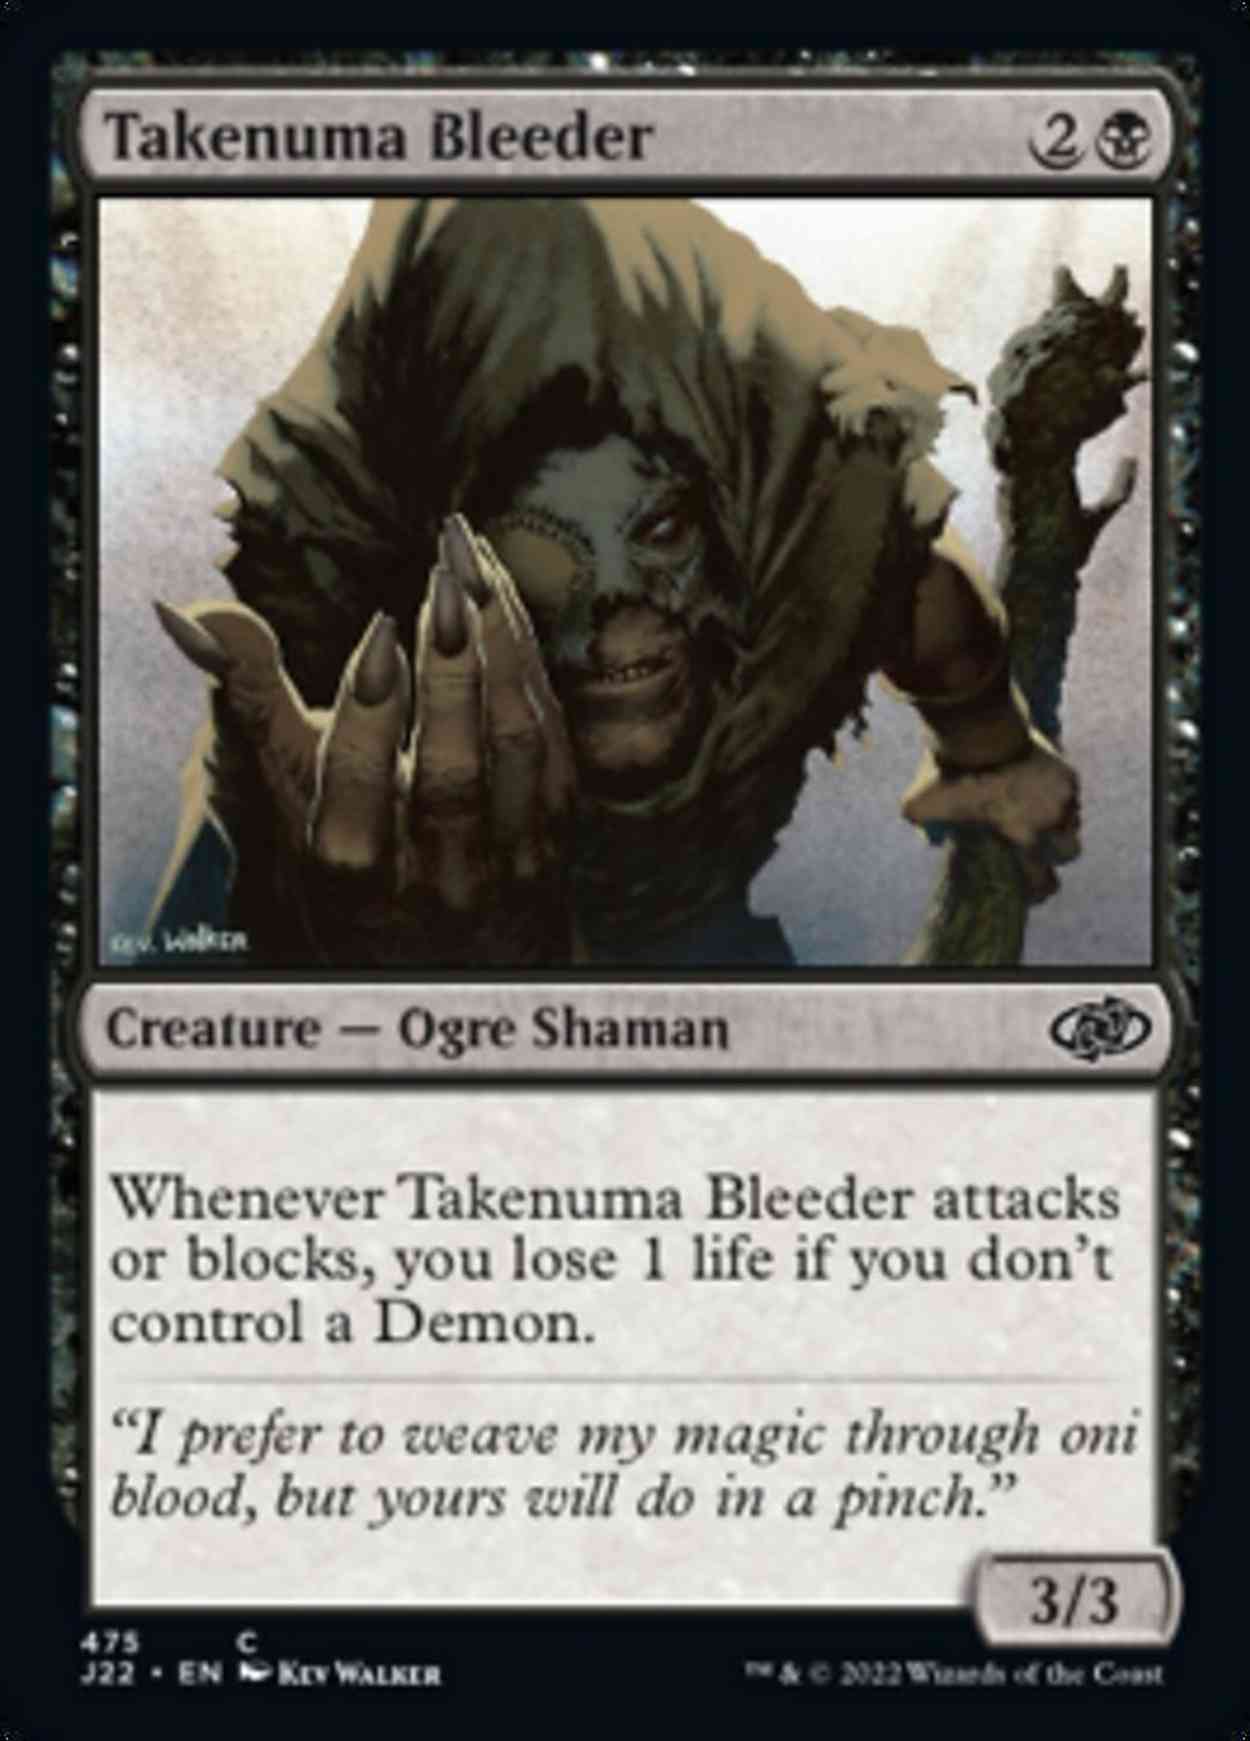 Takenuma Bleeder magic card front